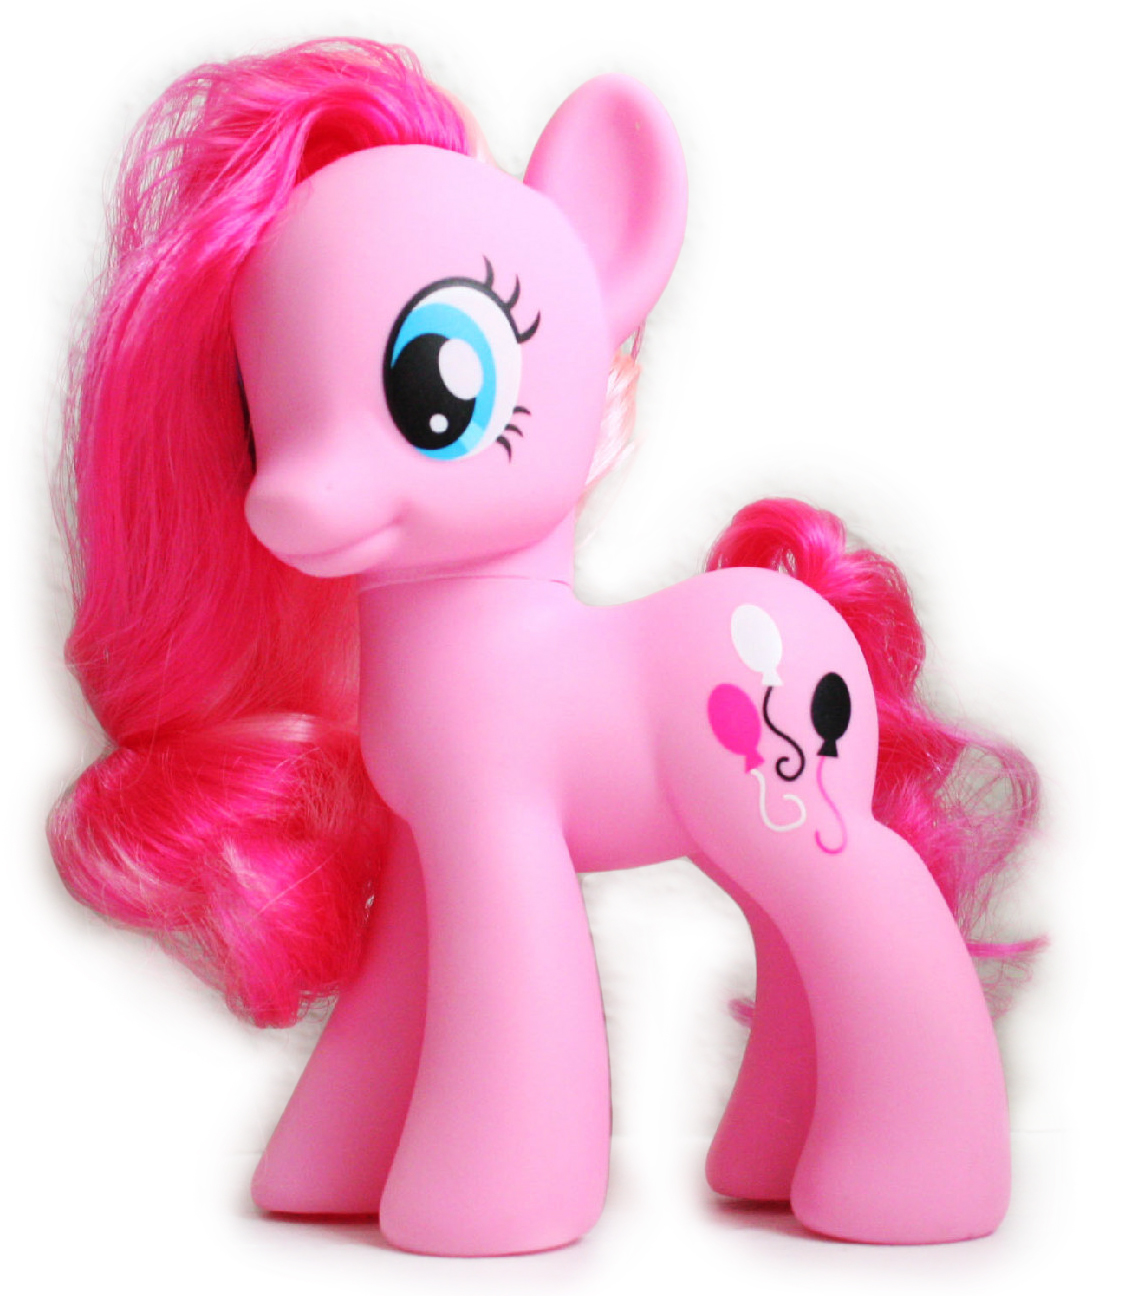 Little pony pinkie. My little Pony Пинки Пай. Фигурка Hasbro Pinkie pie b5384. My little Pony Toys Пинки Пай. My little Pony Pinkie pie игрушка.